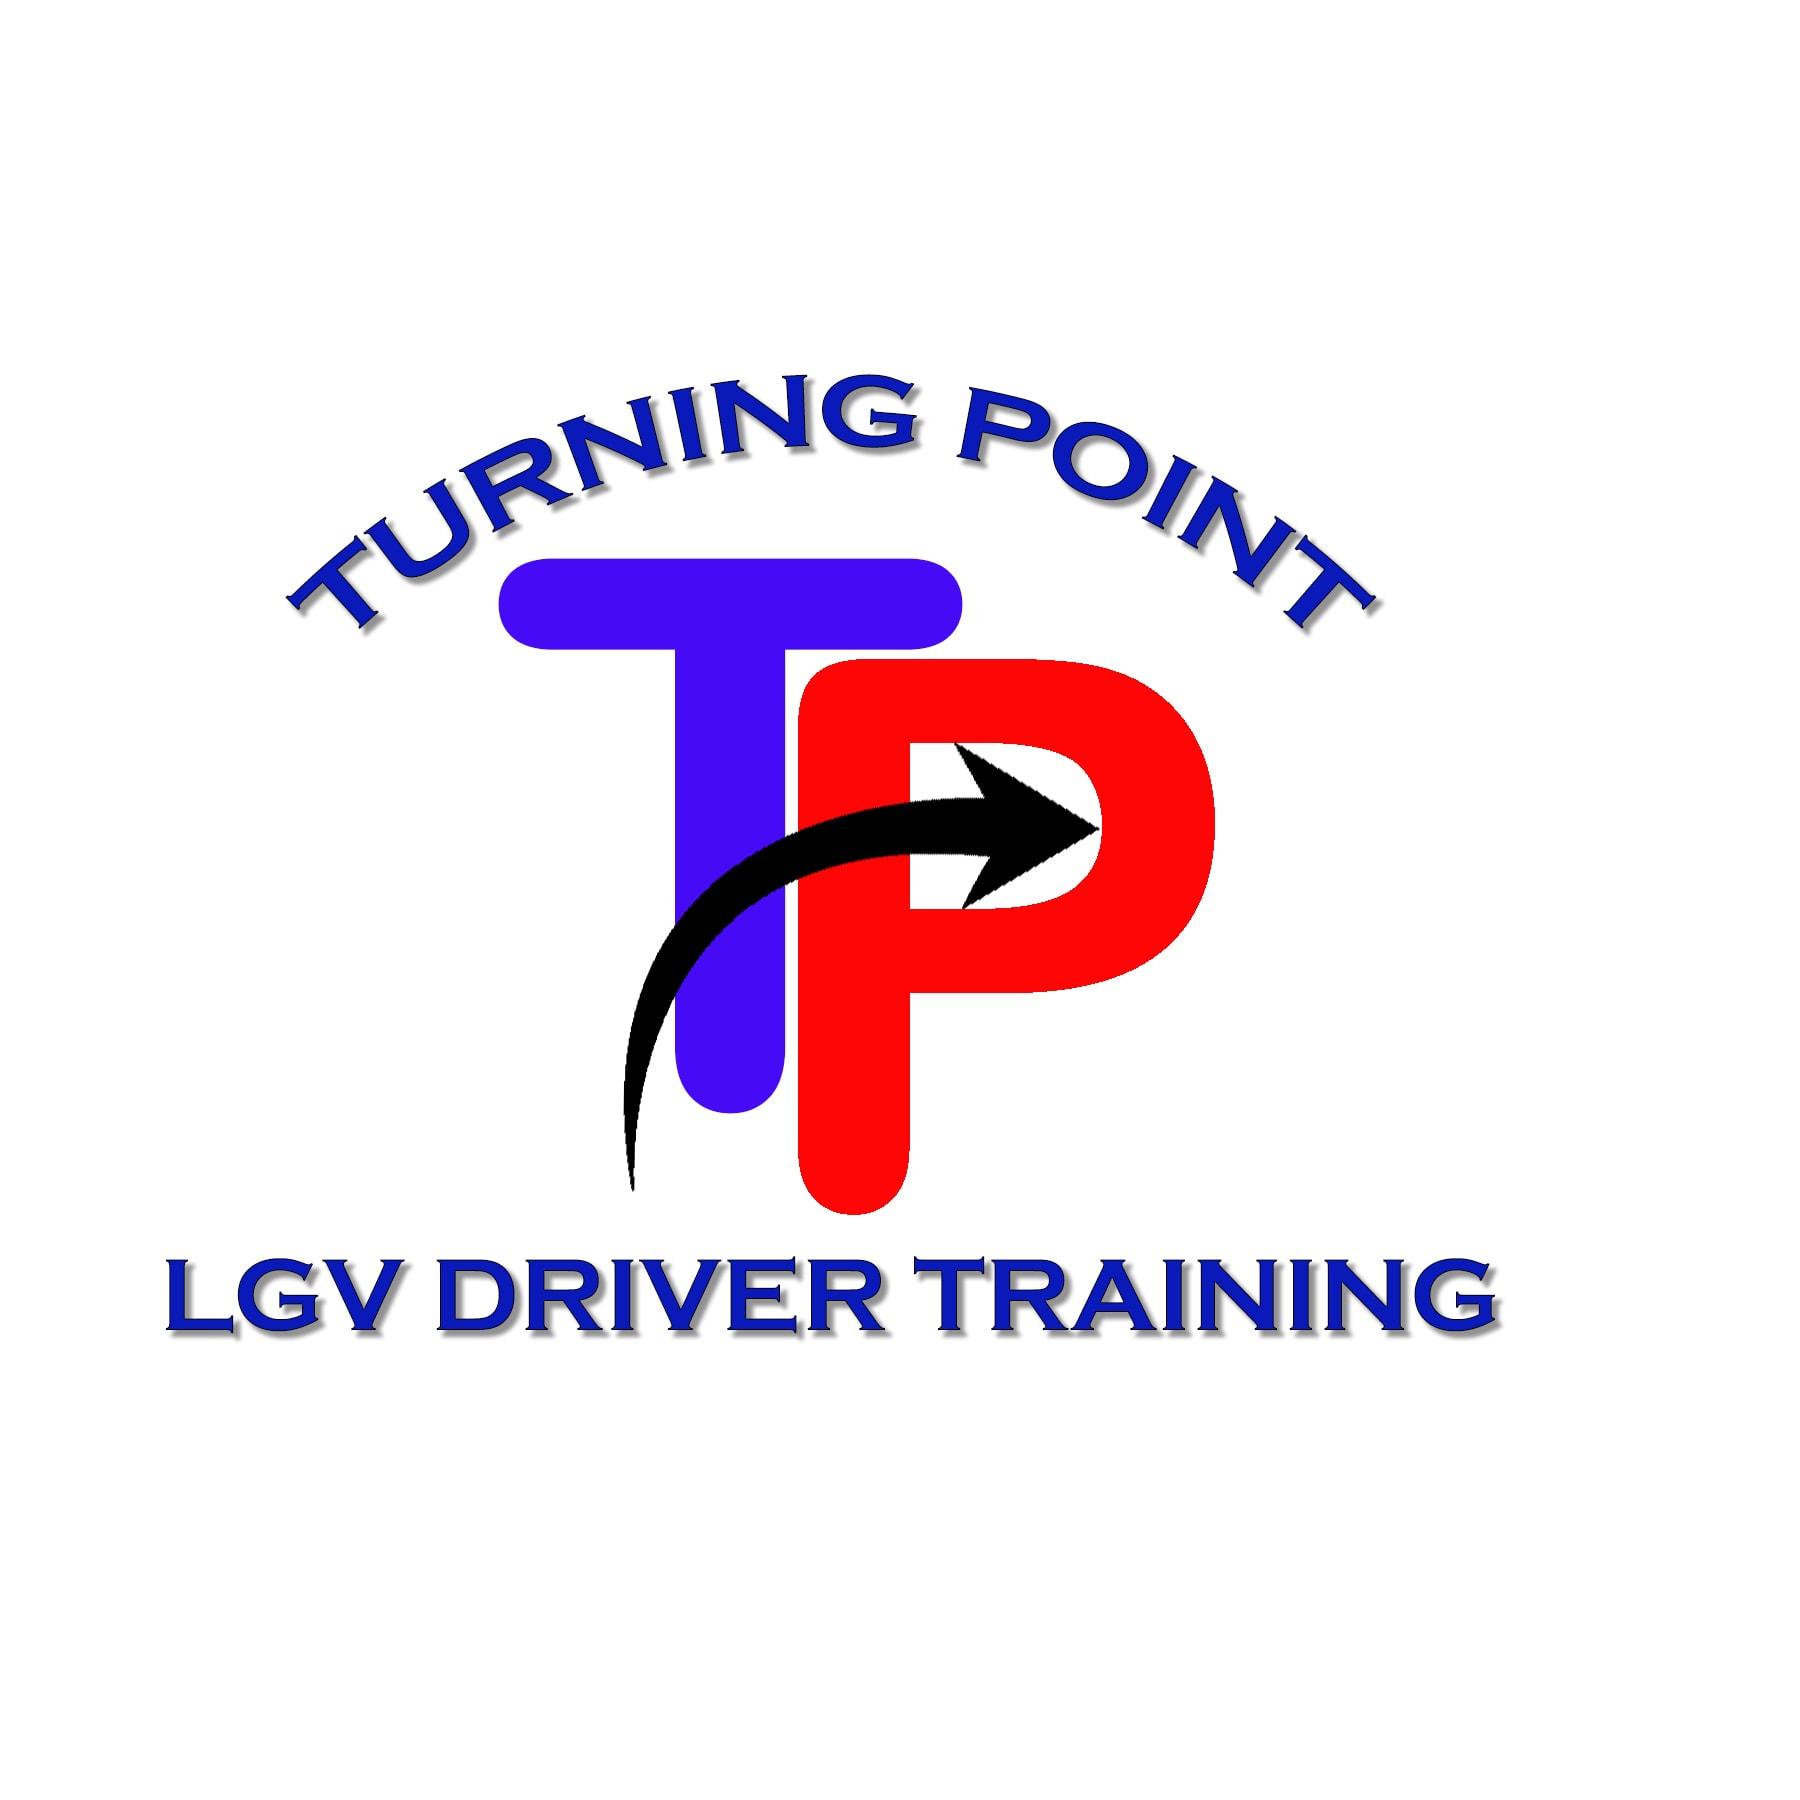 Images Turning Point LGV Driver Training